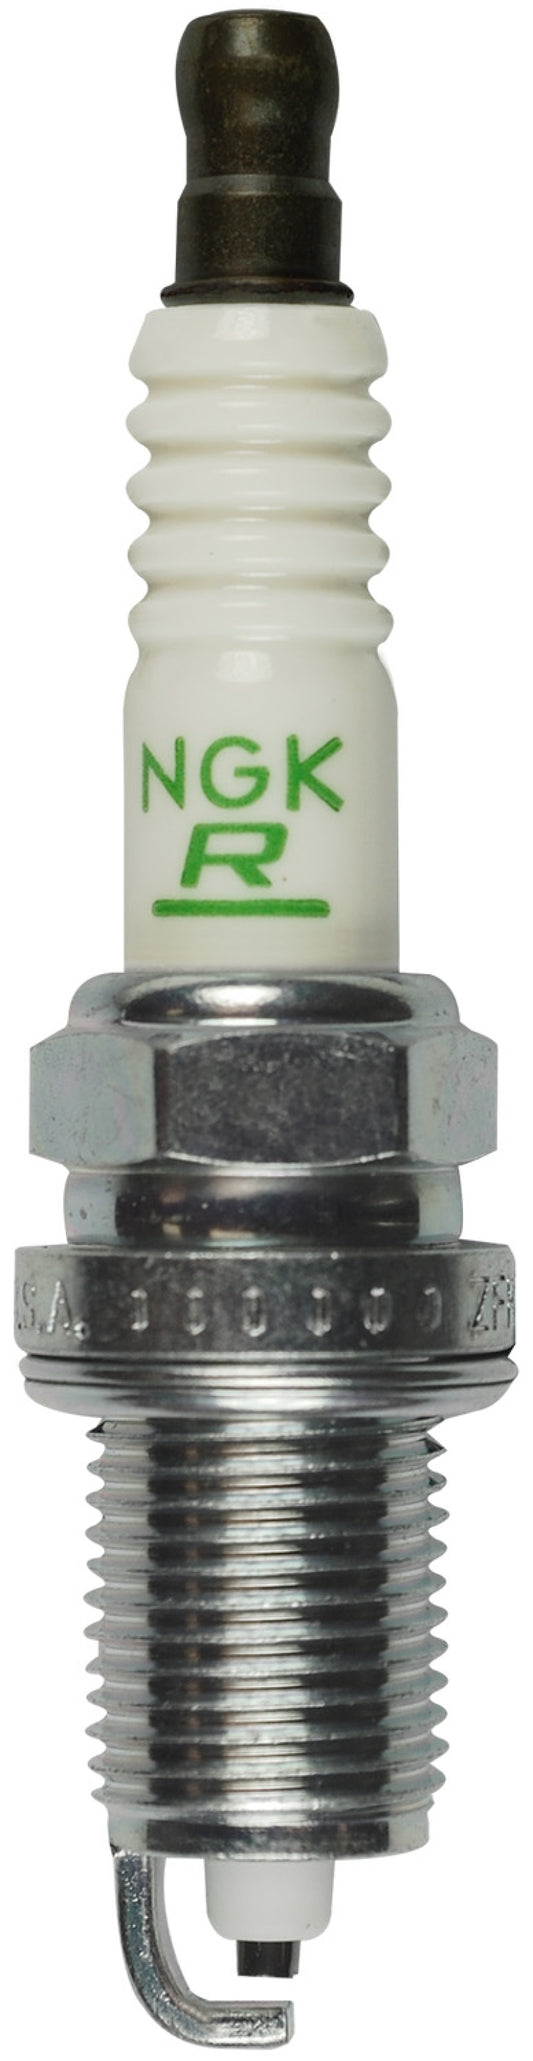 NGK V-Power Spark Plug Box of 4 (ZFR4F-11)